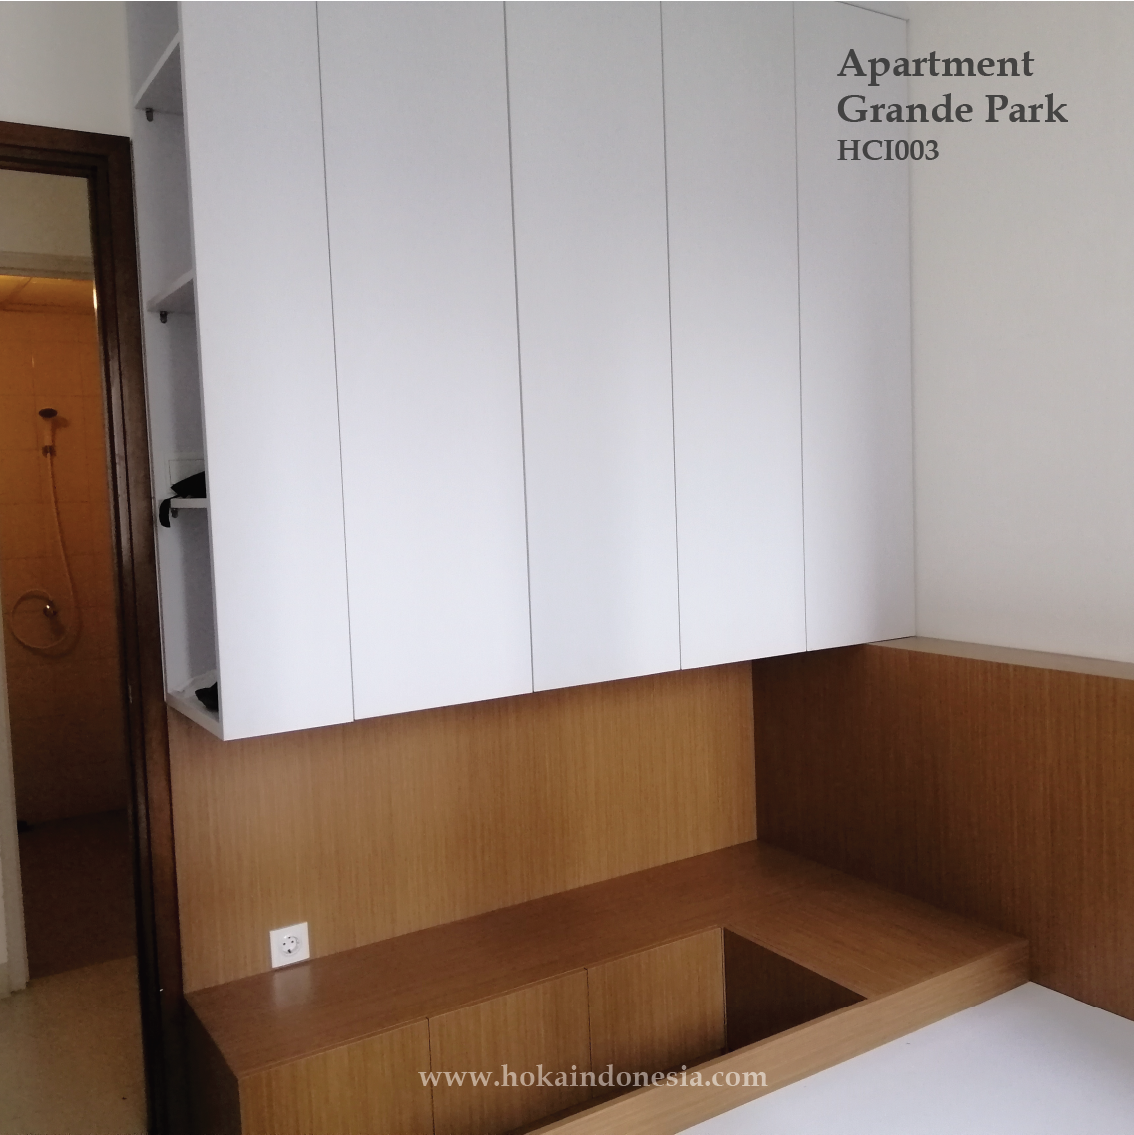 Konsep Design Apartment Grande Park (Bedroom) – HCI003 HOKA Indonesia